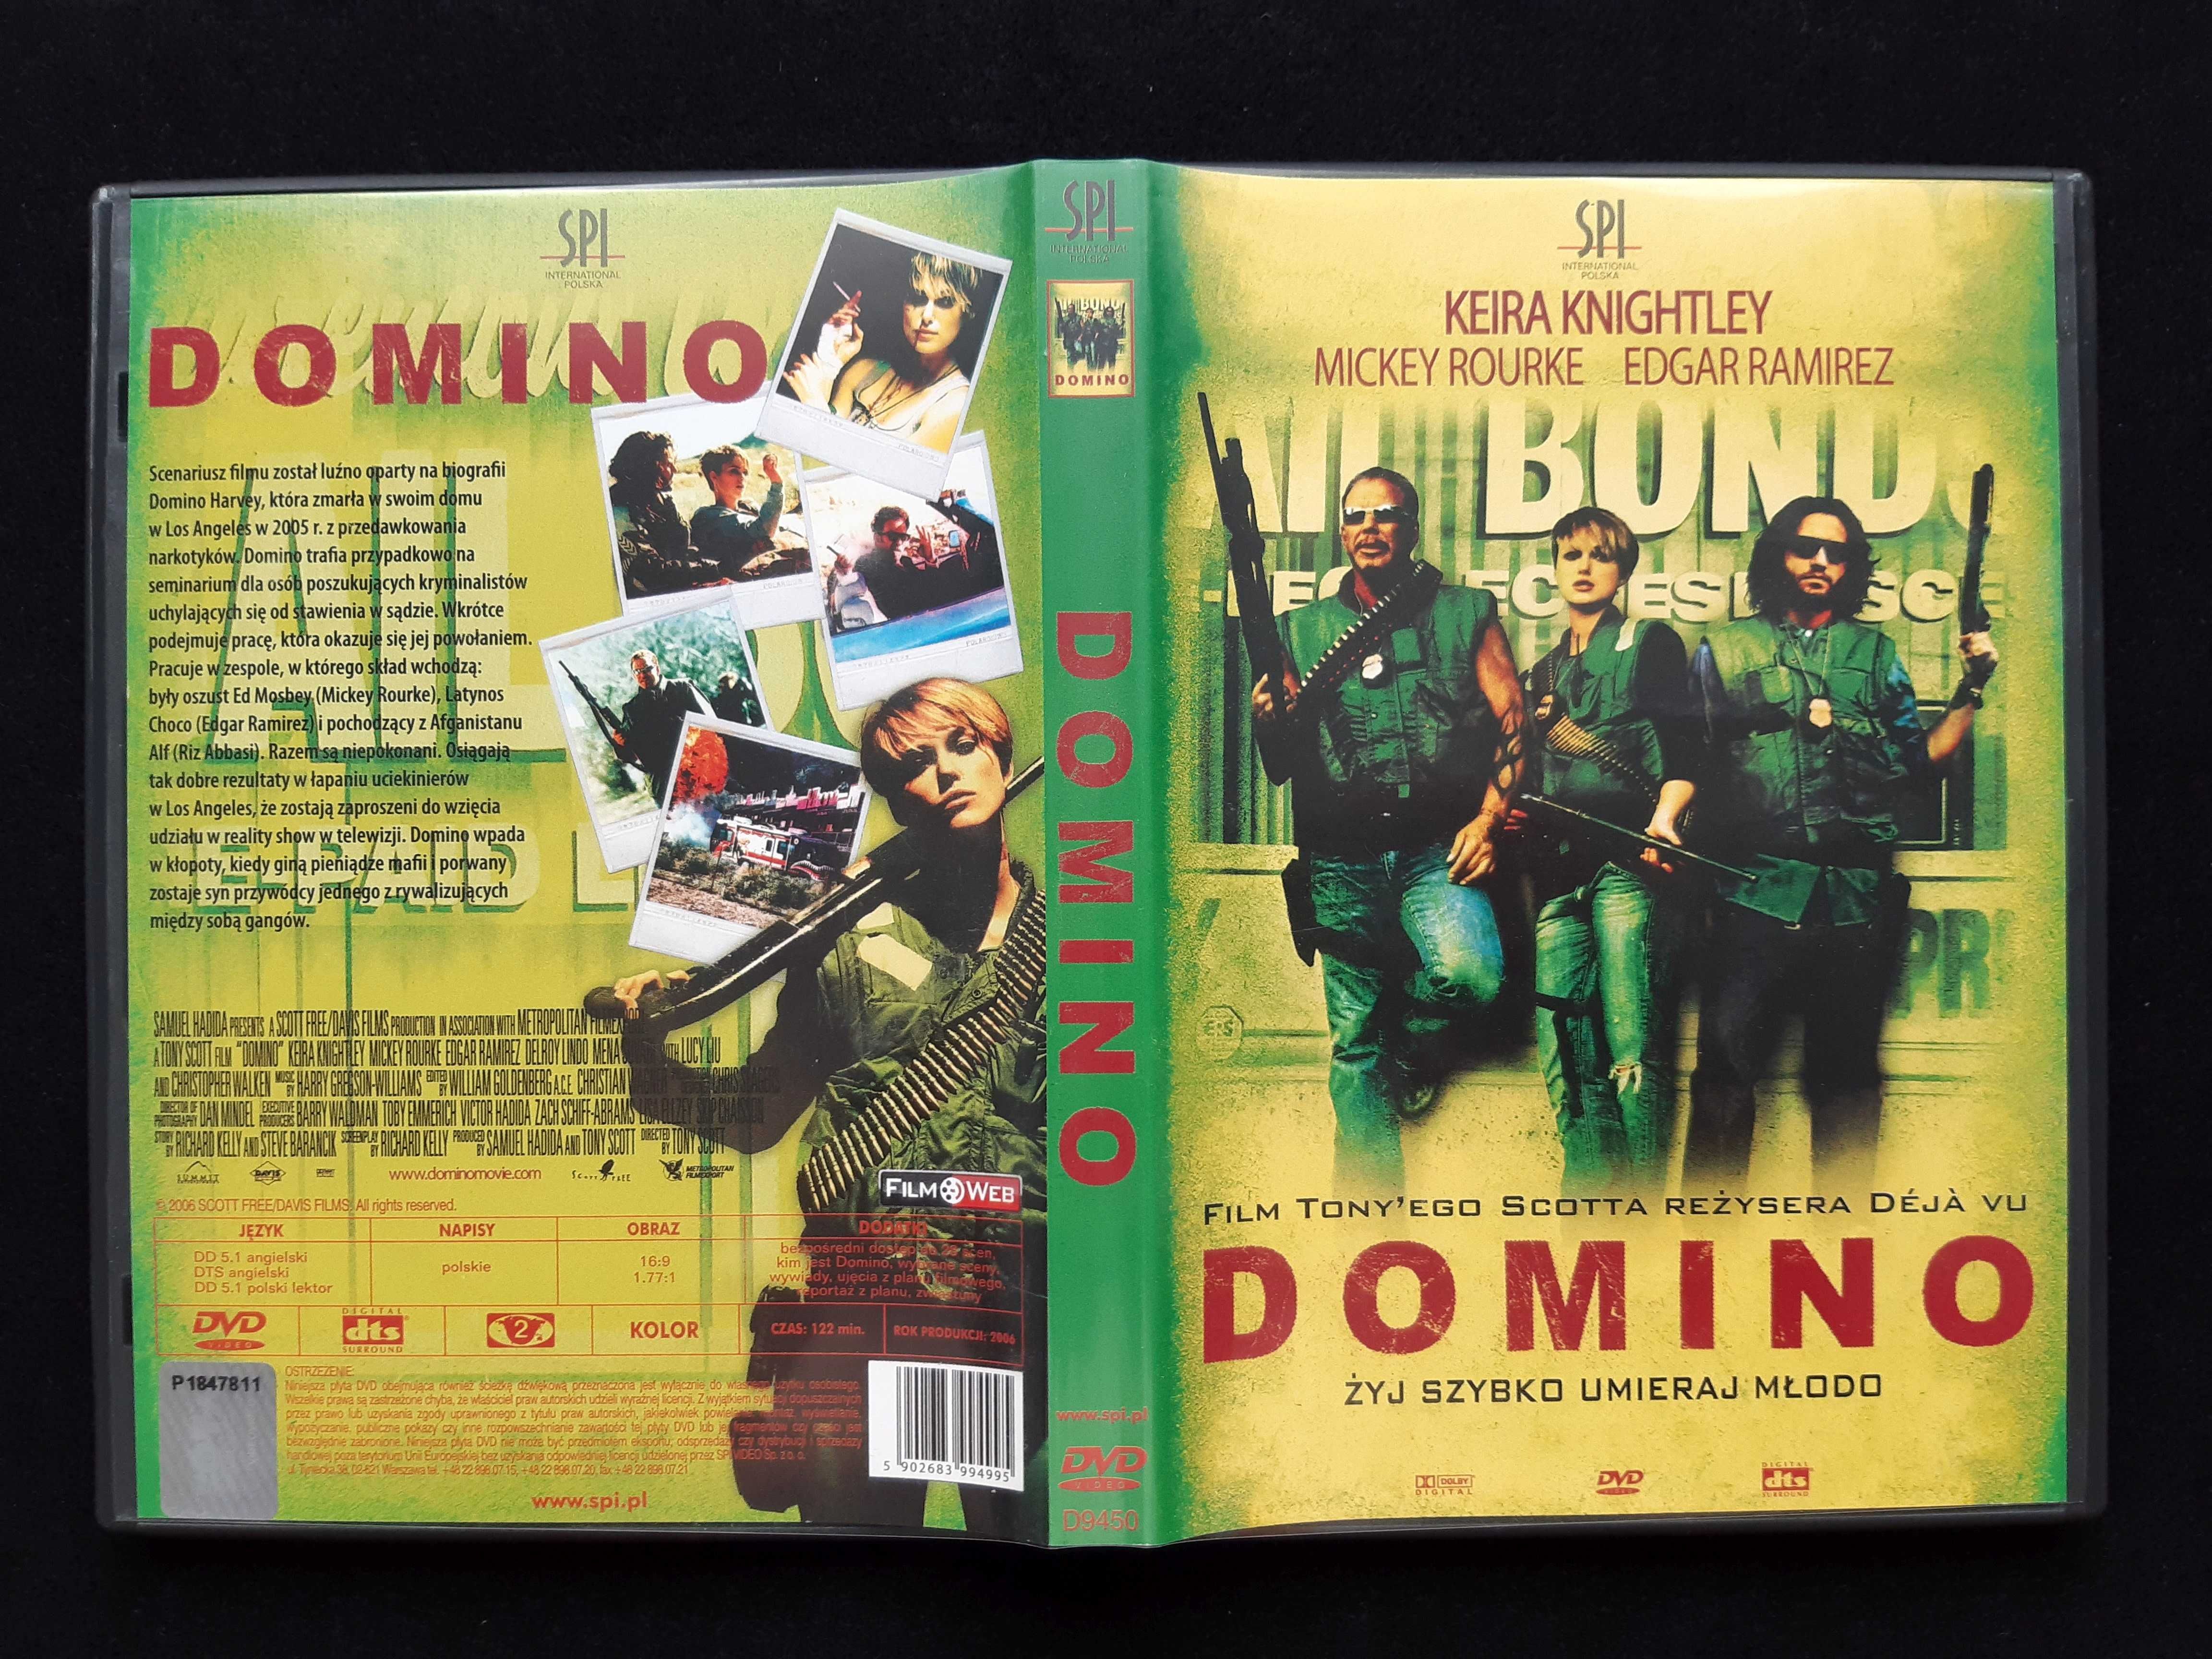 DVD Domino, reż. Tony Scott; Keira Knightly, Mickey Rourke